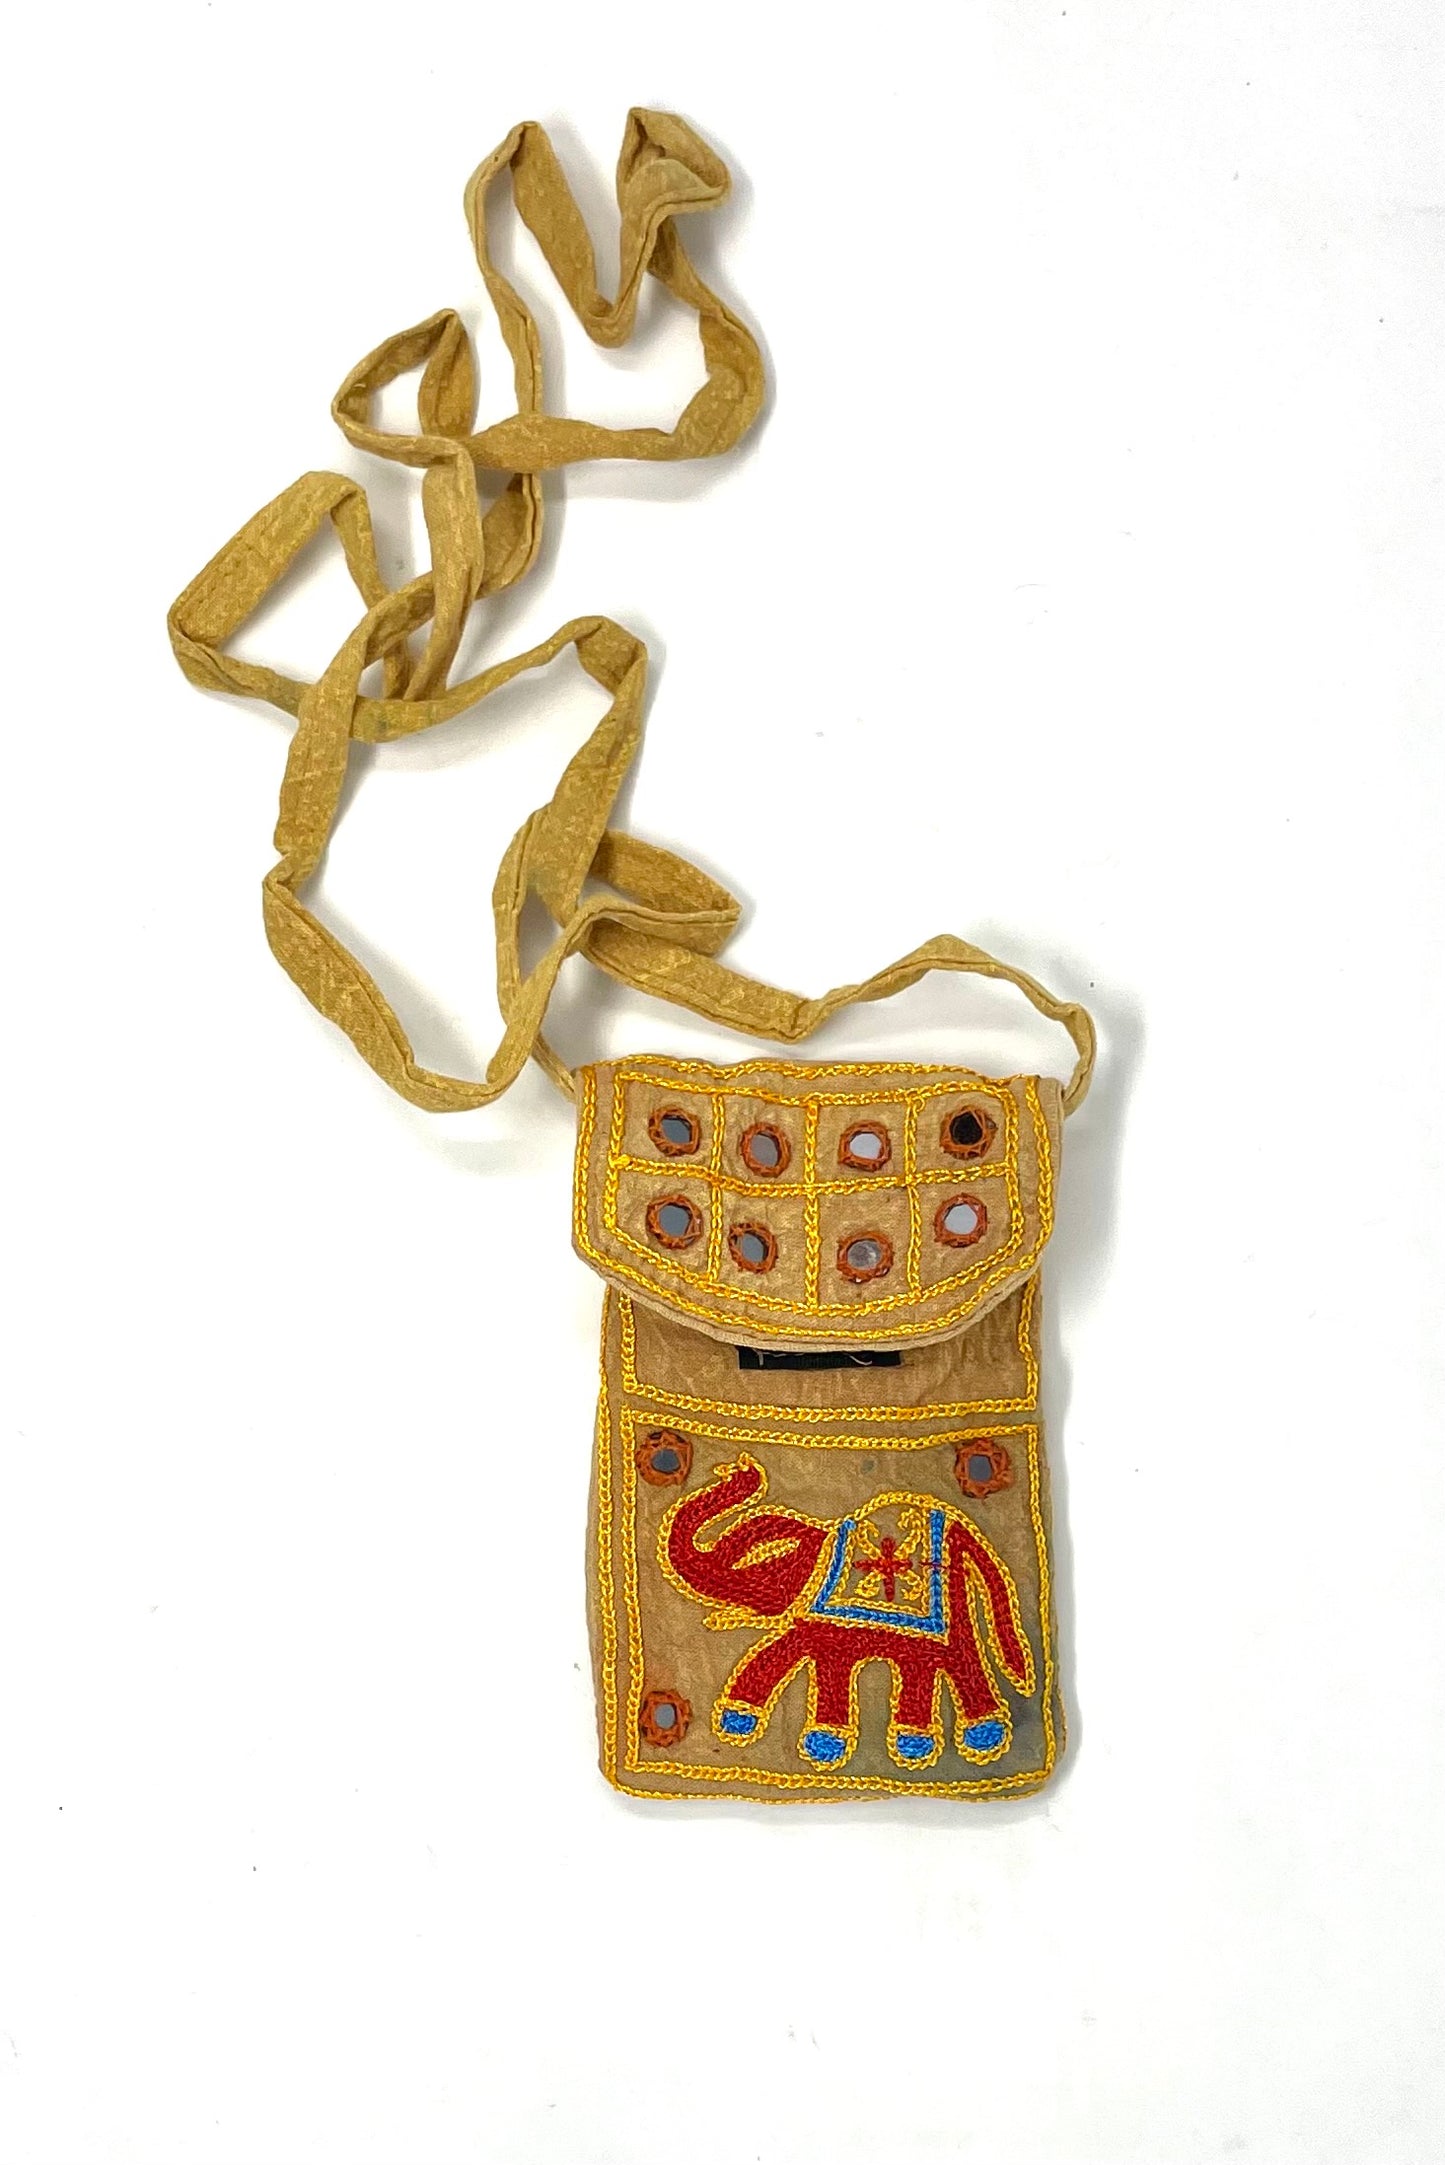 Handmade Embroidered Elephant Cross Body Bag - Vibrant Colors & Versatile Design"